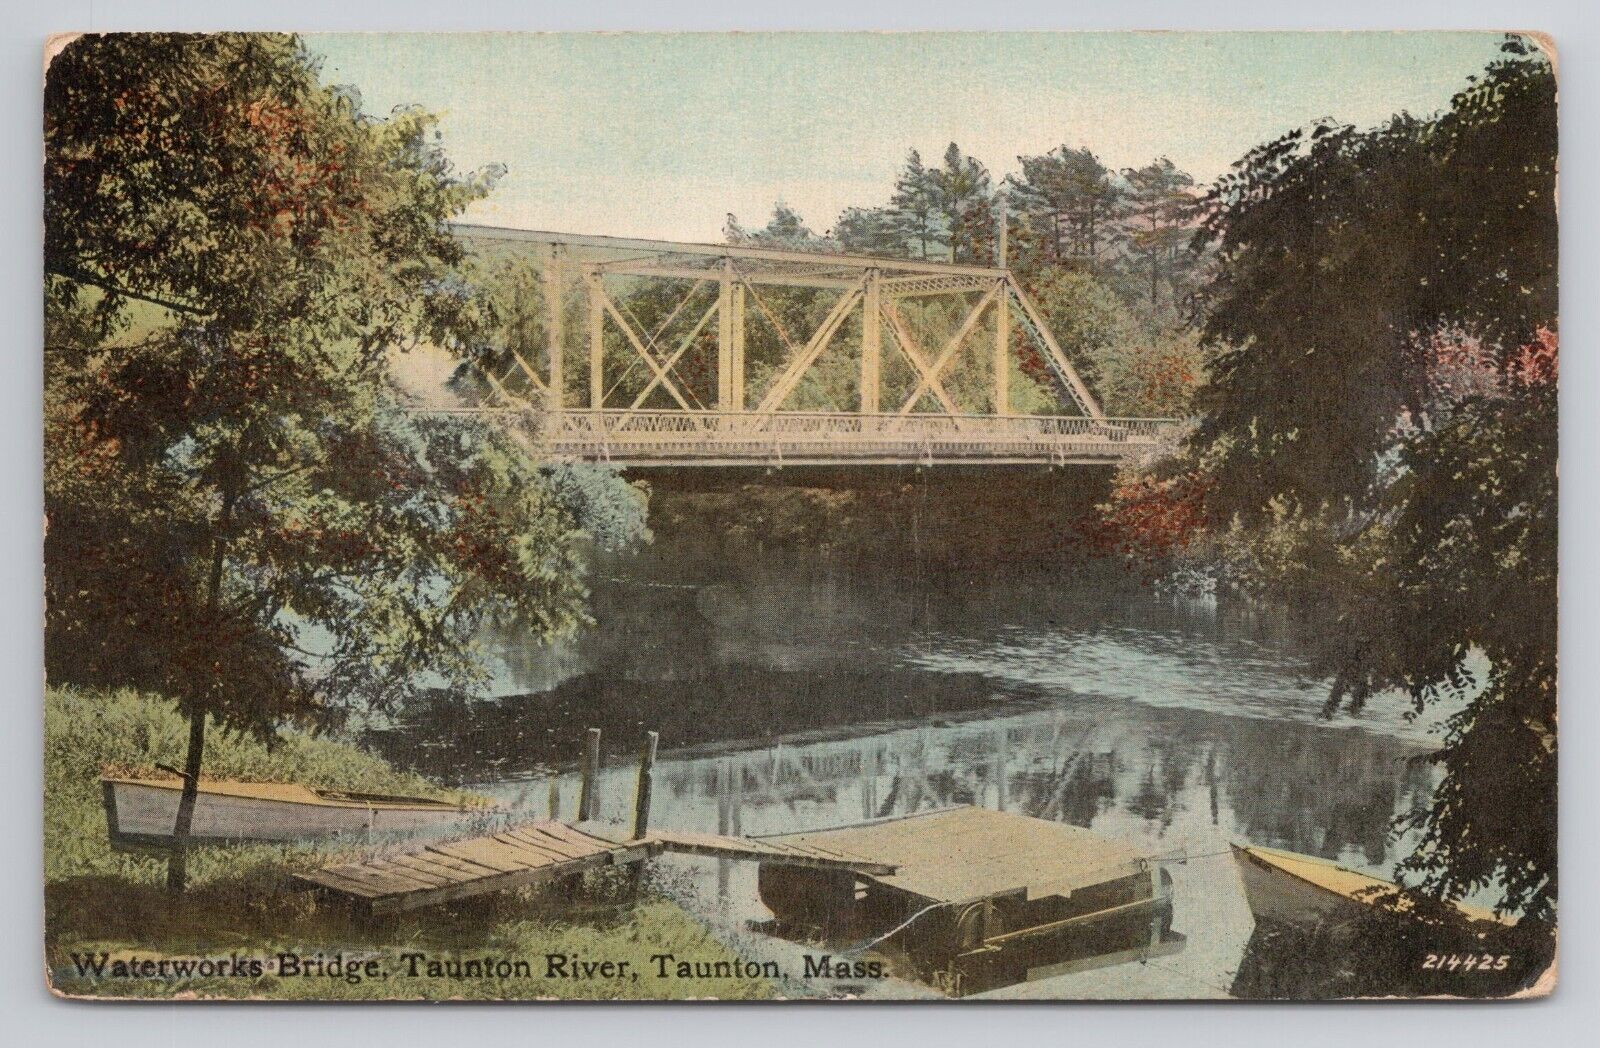 Waterworks Bridge Taunton River Taunton Massachusetts c1910 Antique Postcard